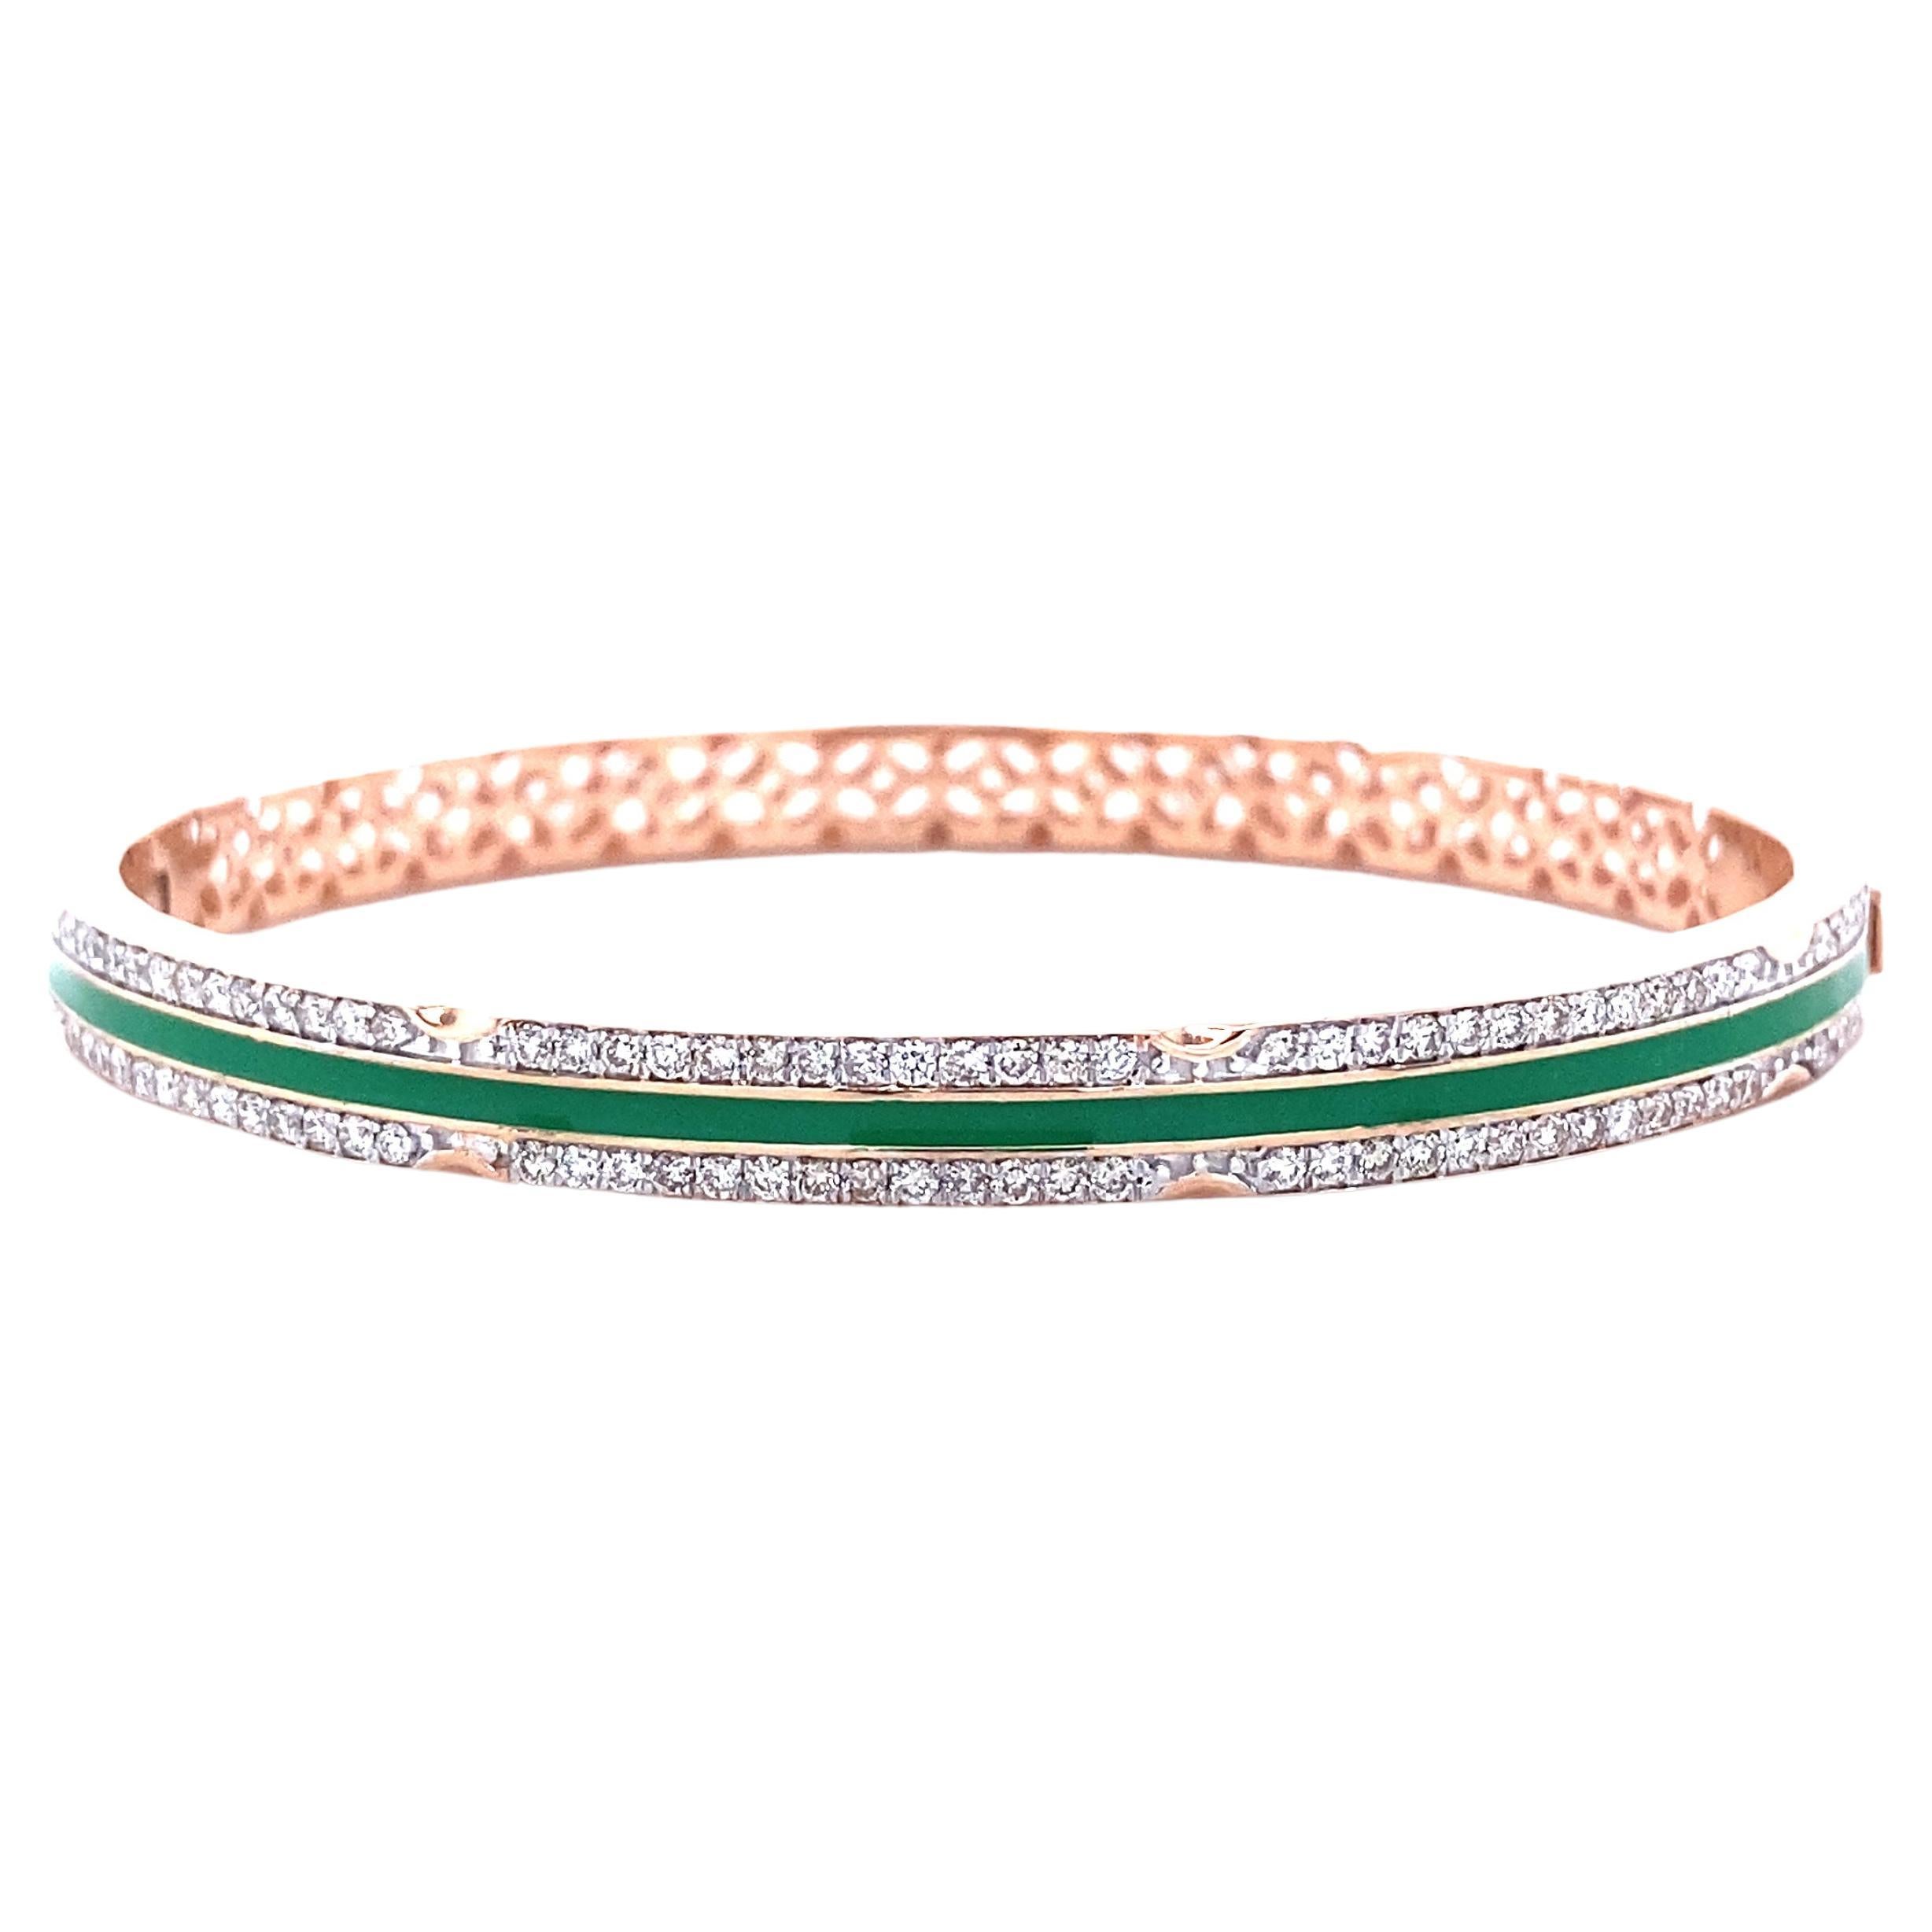 Filigree Diamond Bracelet with Green Enamelling set in 18k Solid Gold